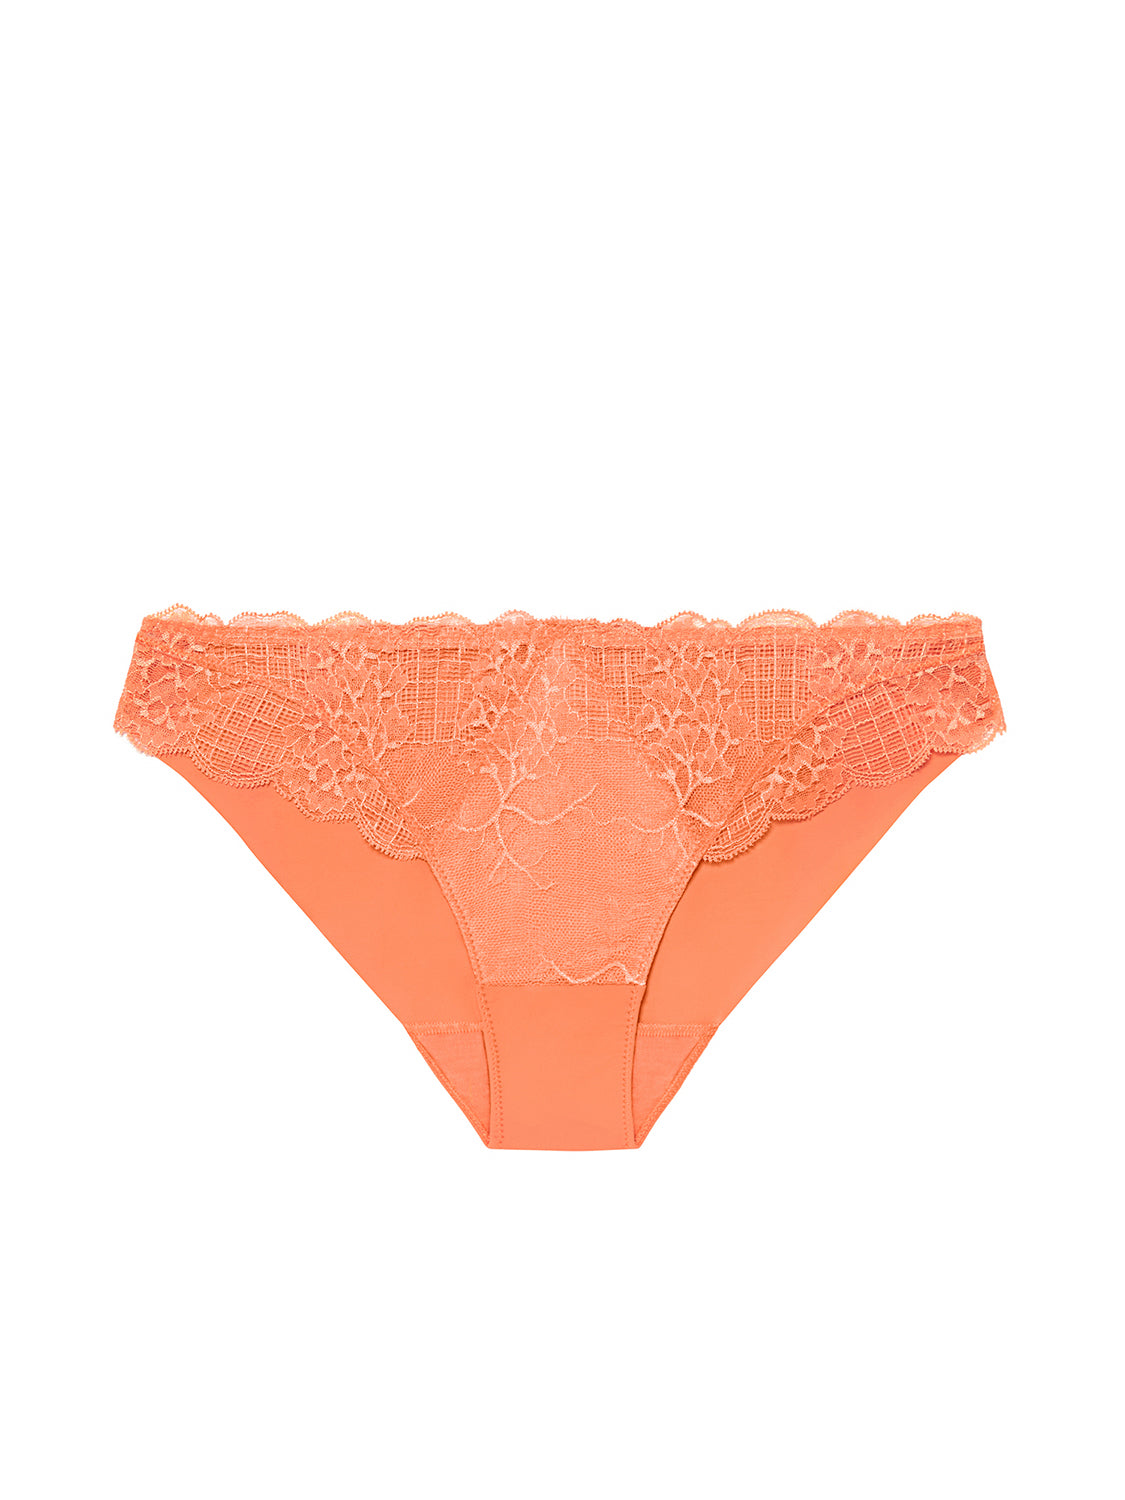 Reve Bikini - Apricot